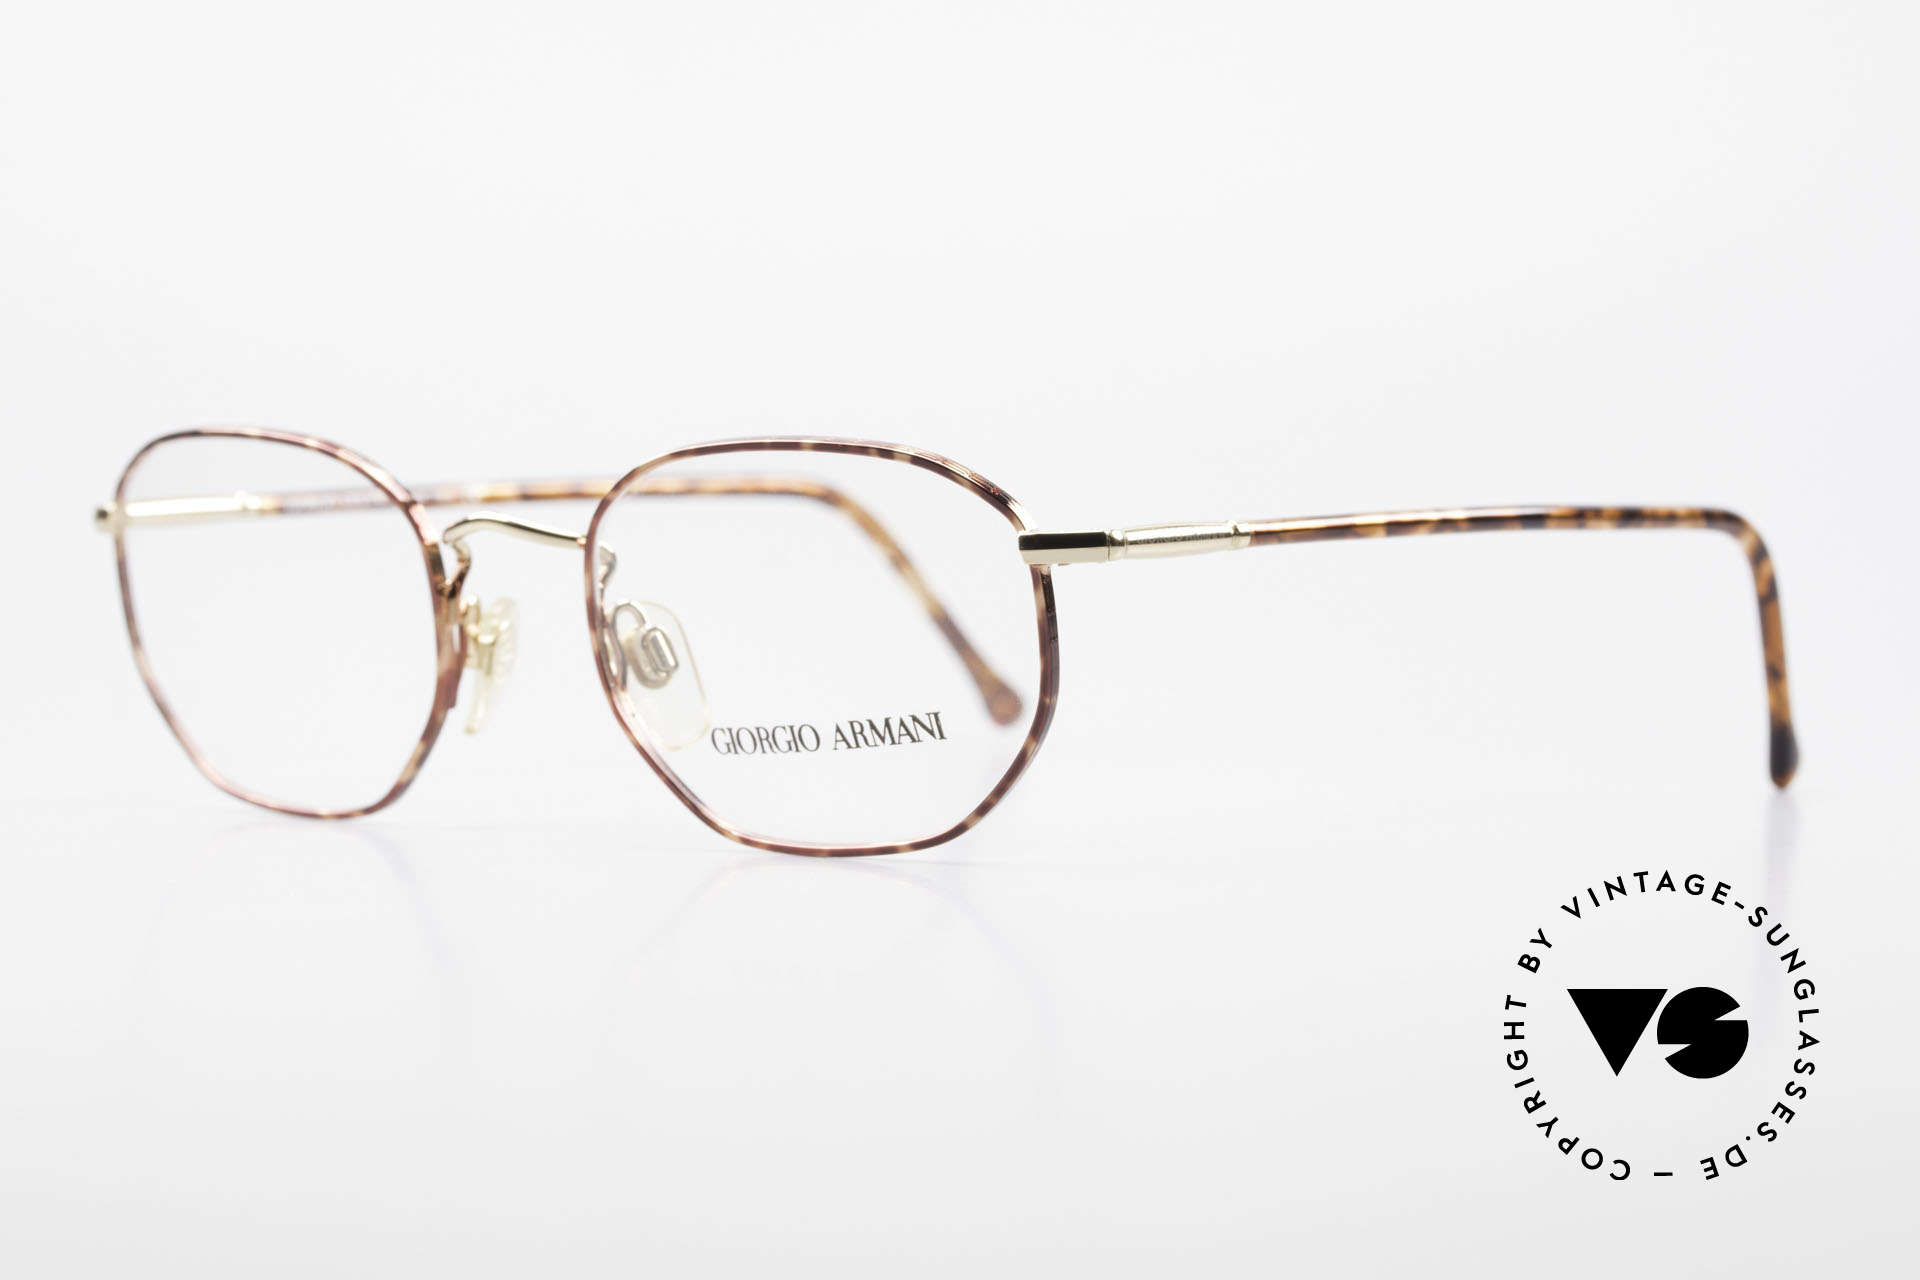 Giorgio Armani 187 Classic 90's Men's Eyeglasses, brilliant frame finish in chestnut brown / shiny gold, Made for Men